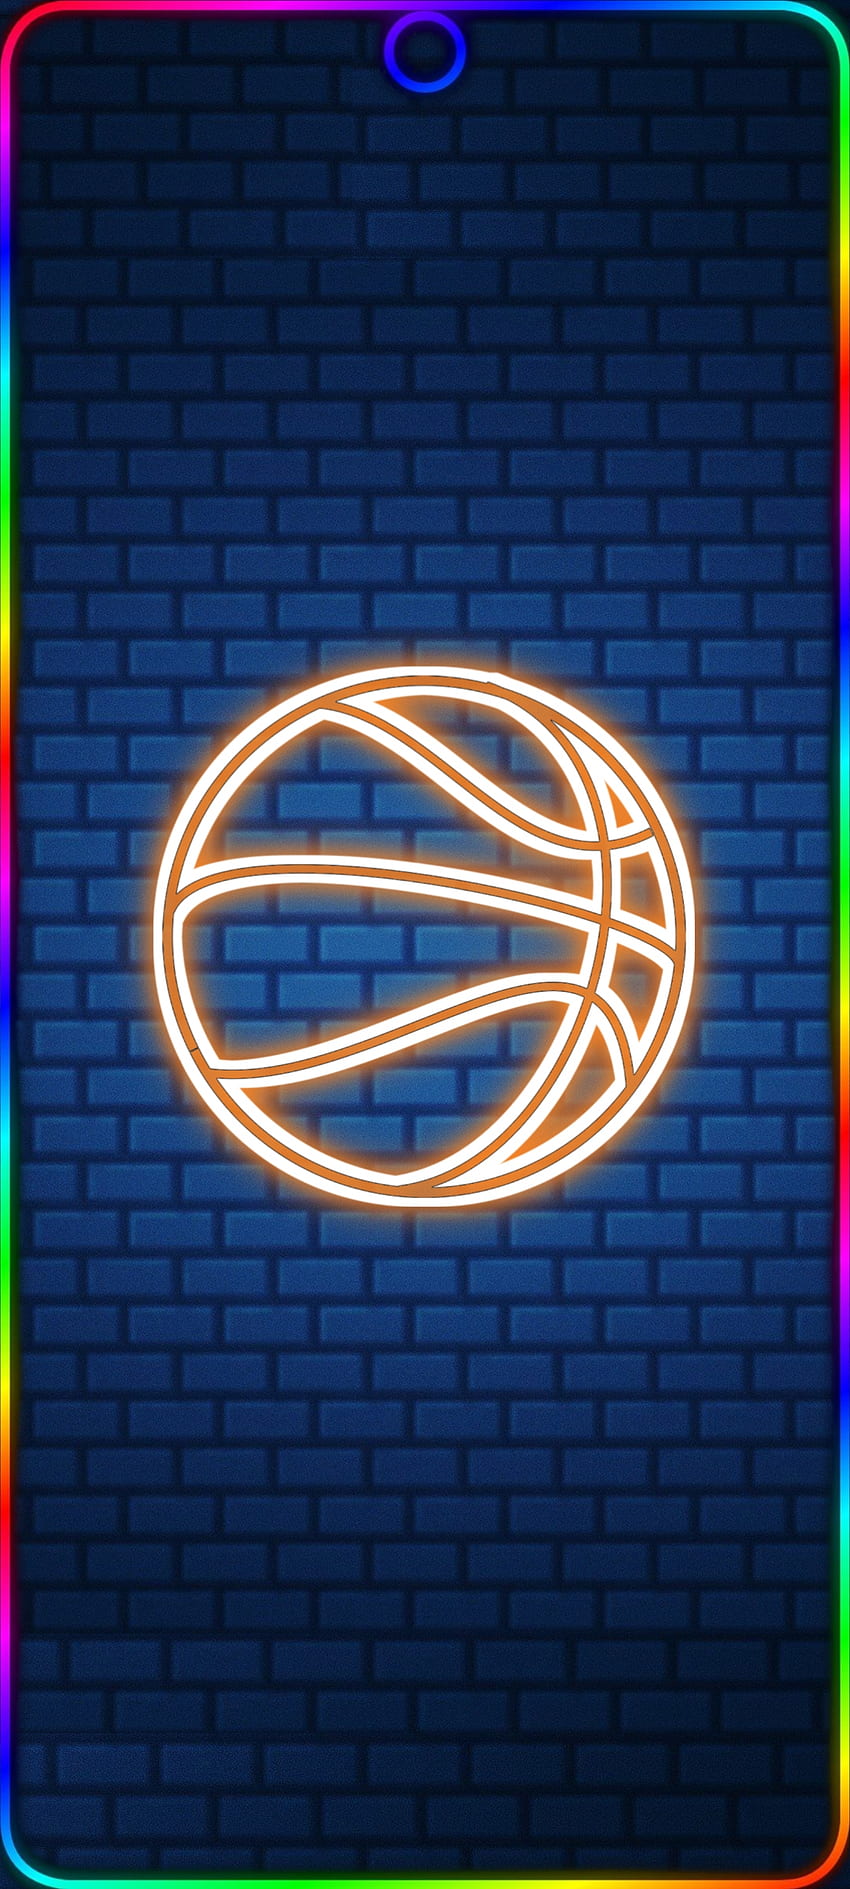 Bola basket neon, bingkai, bola, pelangi, bola basket, bola basket, bingkai pelangi, biru, kuning, bola neon, bola basket neon wallpaper ponsel HD